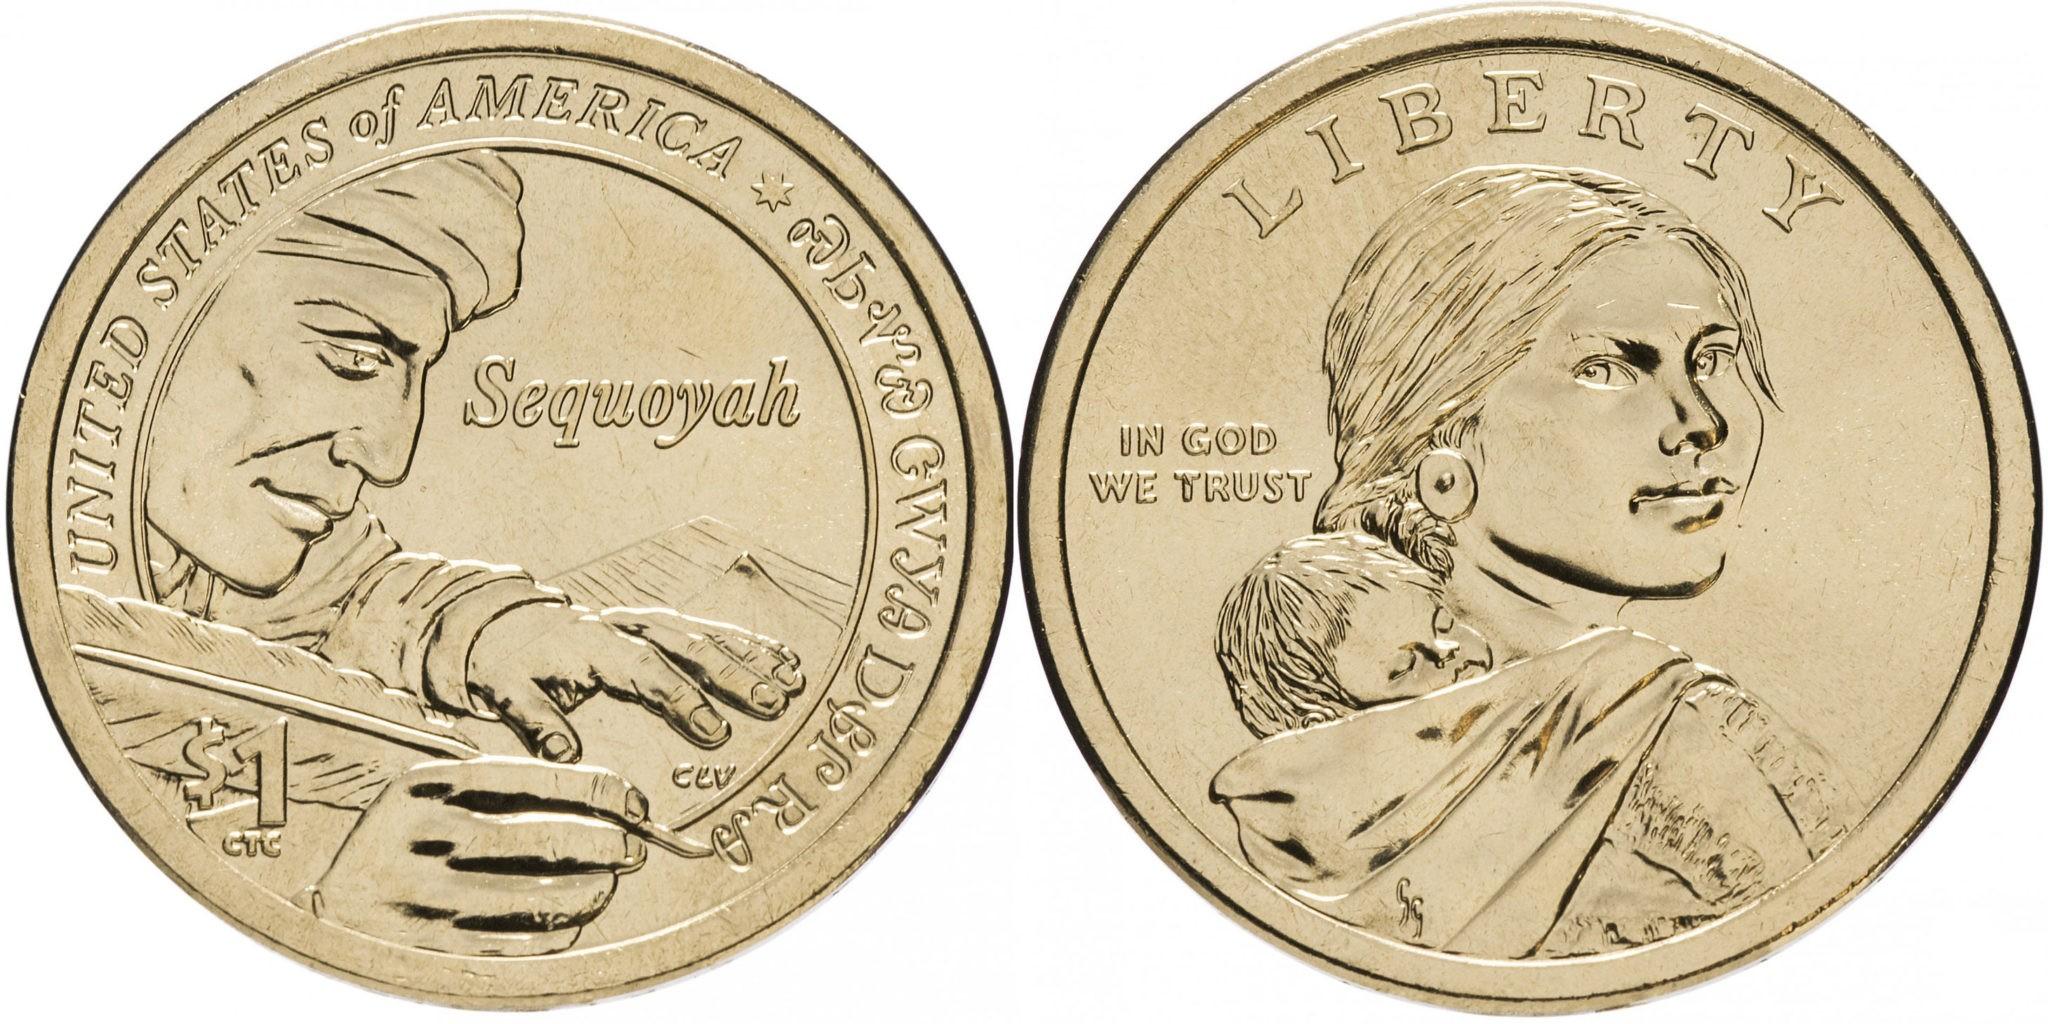 1 доллар сакагавея. 1 Доллар США Сакагавея. 1 Доллар - США - 2020 - индианка - Сакагавея. Монета США Сакагавея Секвойя. 1 Доллар USA Sacagawea.